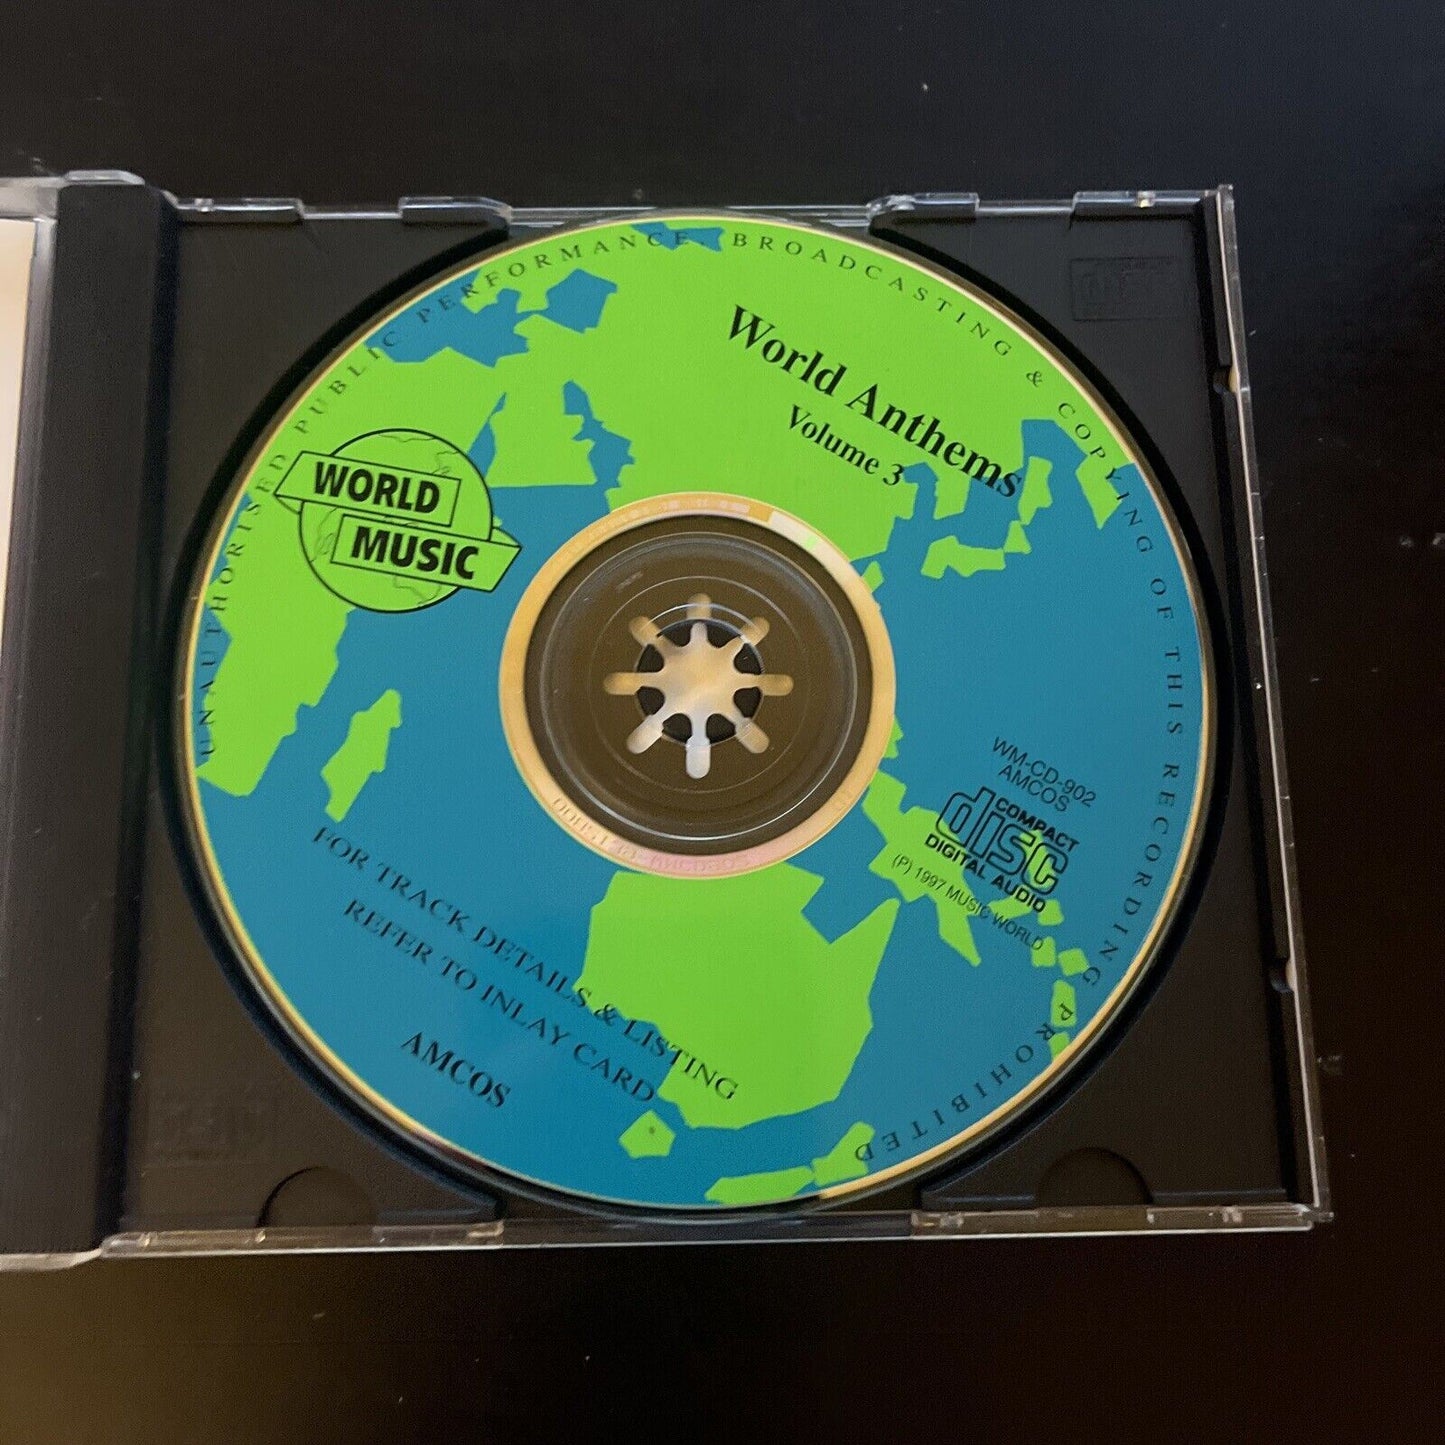 World Anthems - Volume 3 - 20 National Anthems (CD, 1997)